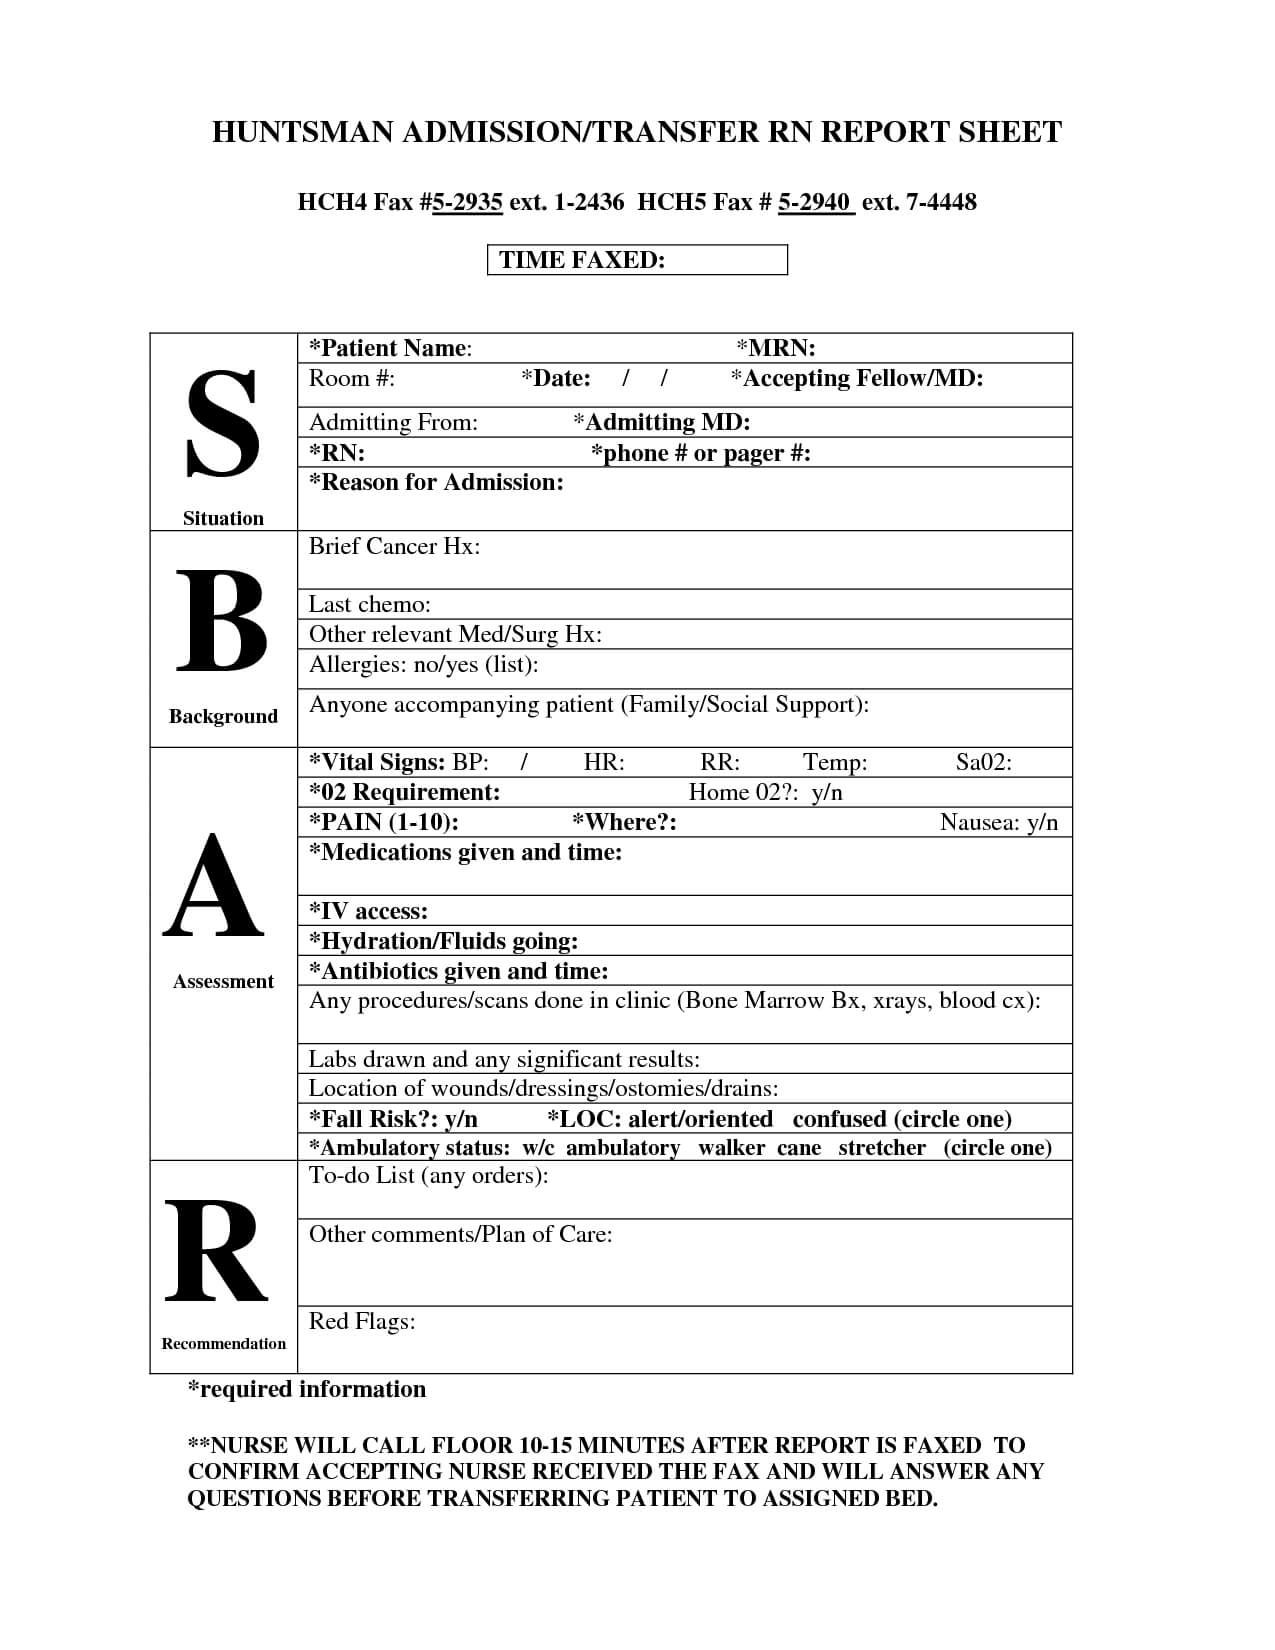 Med Surg Nursing Assessment | Huntsman Sbar Report Sheet Throughout Sbar Template Word